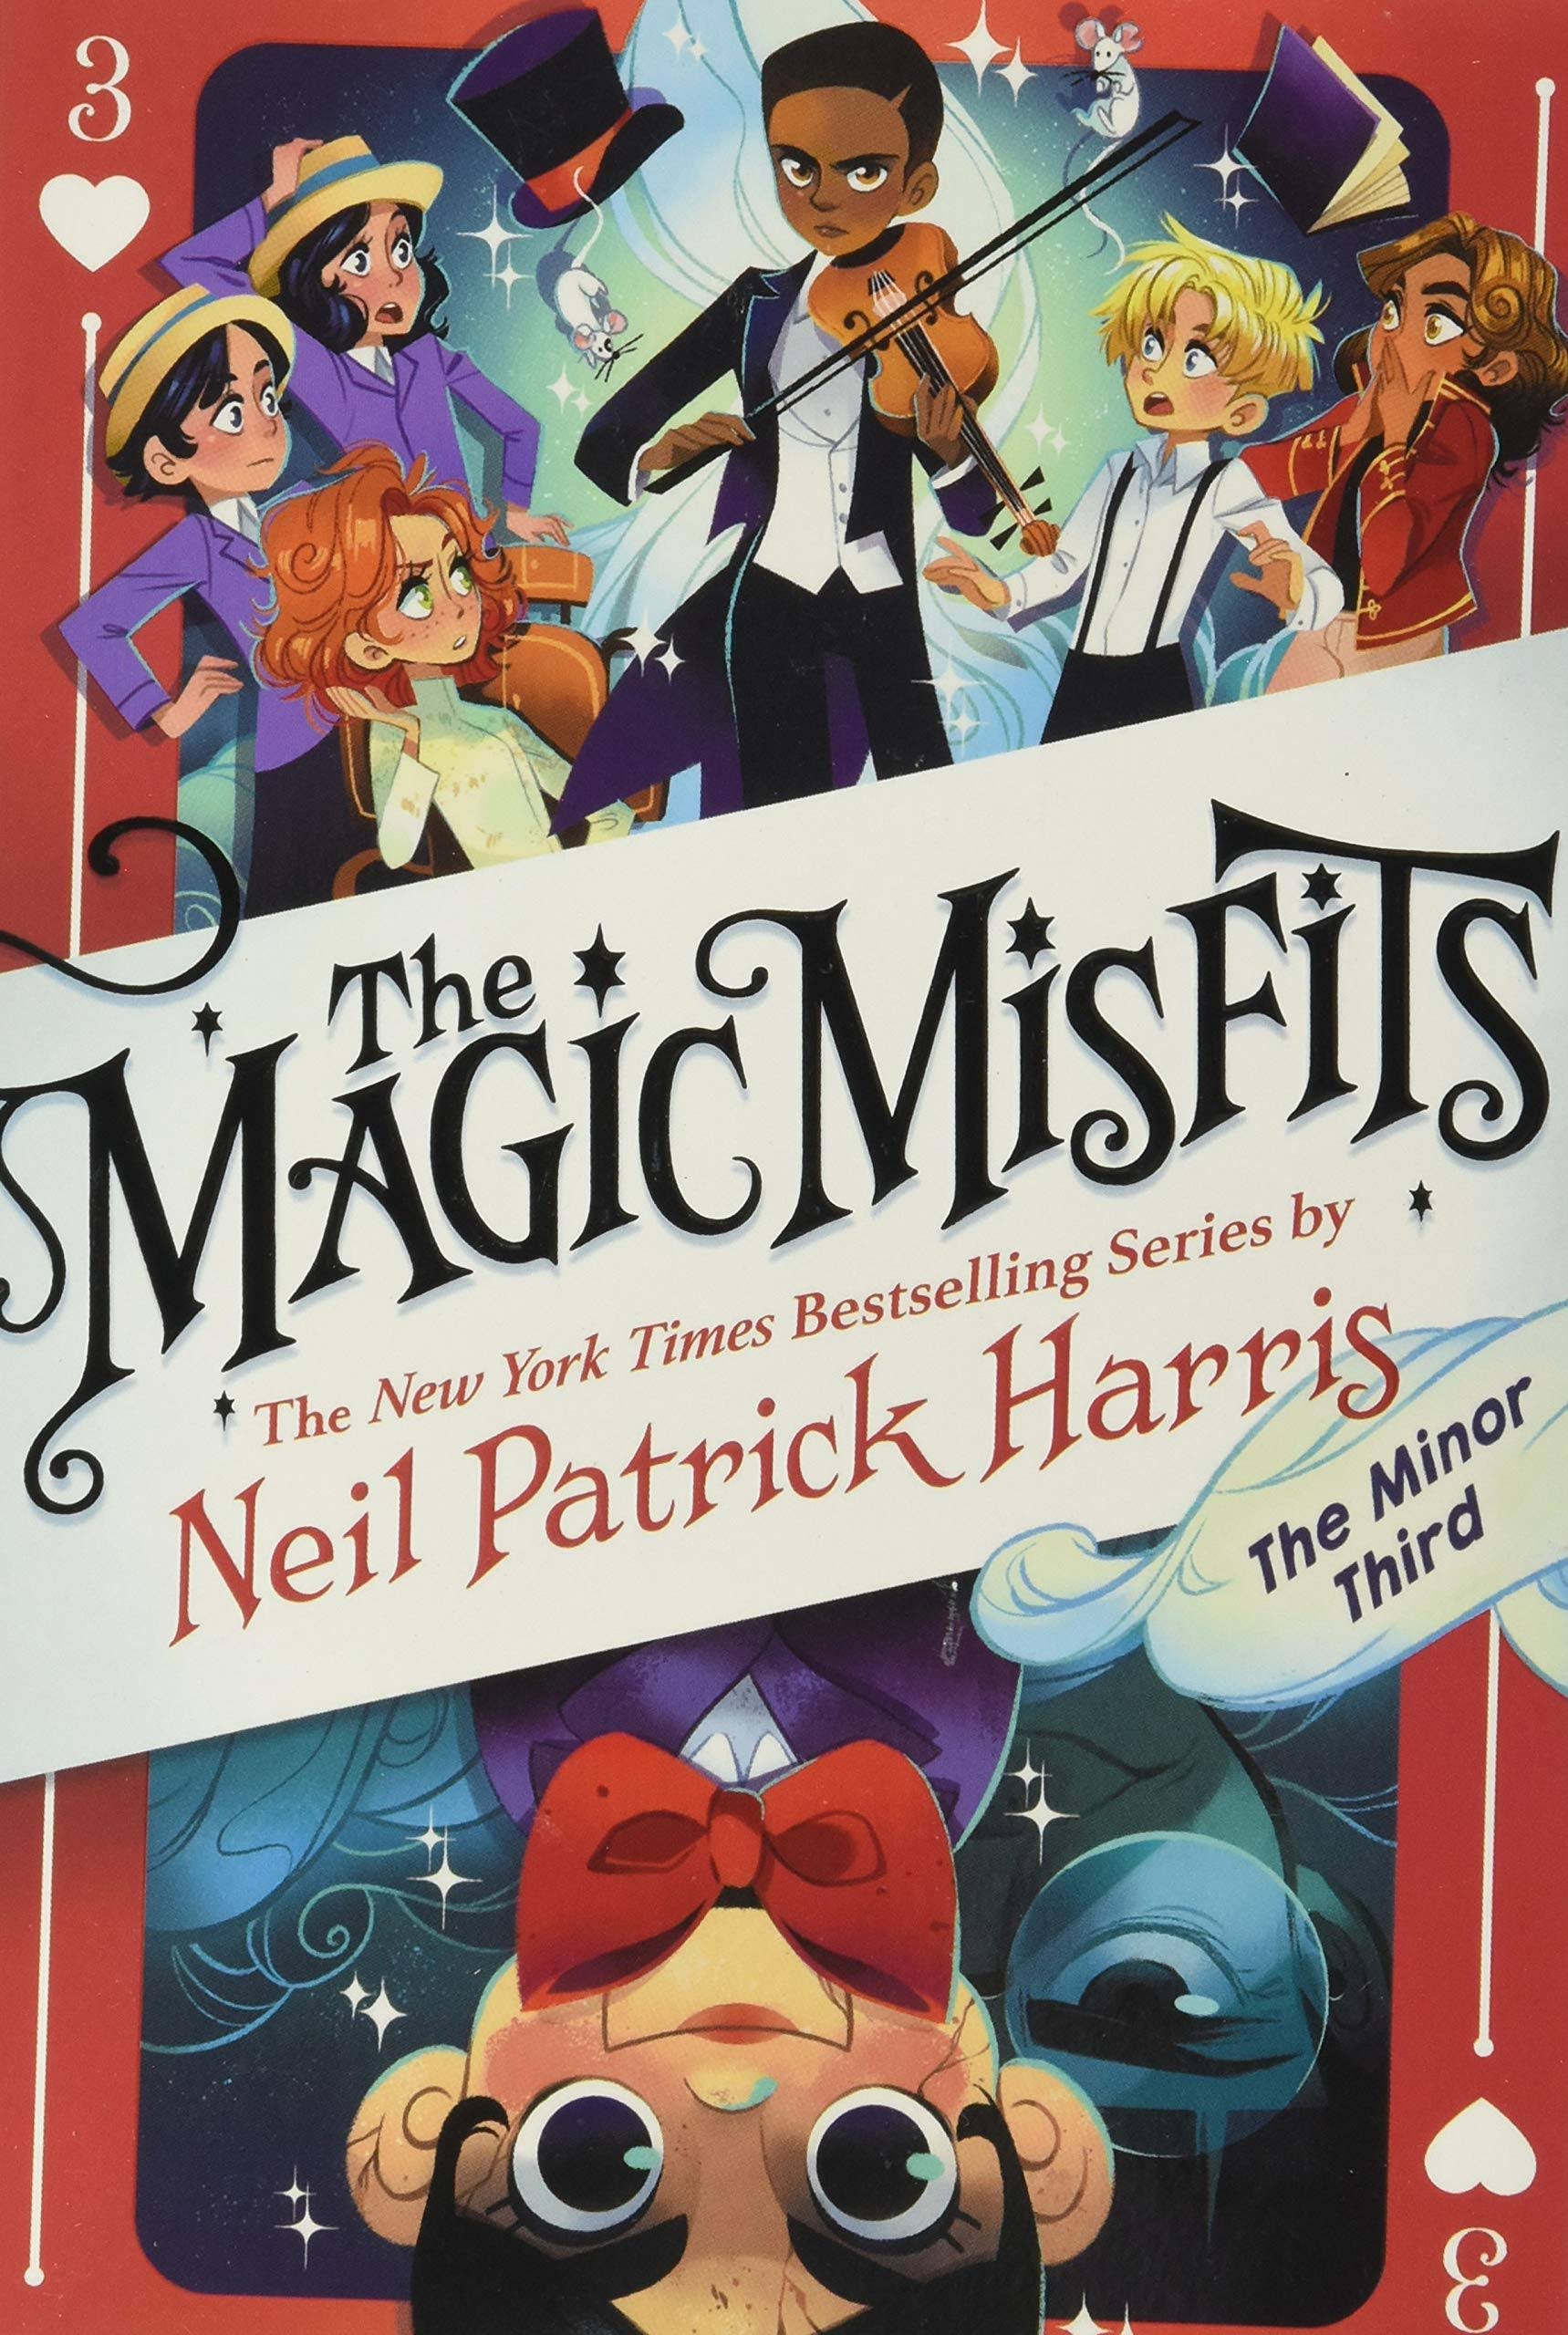 The Magic Misfits: The Minor Third [Book]